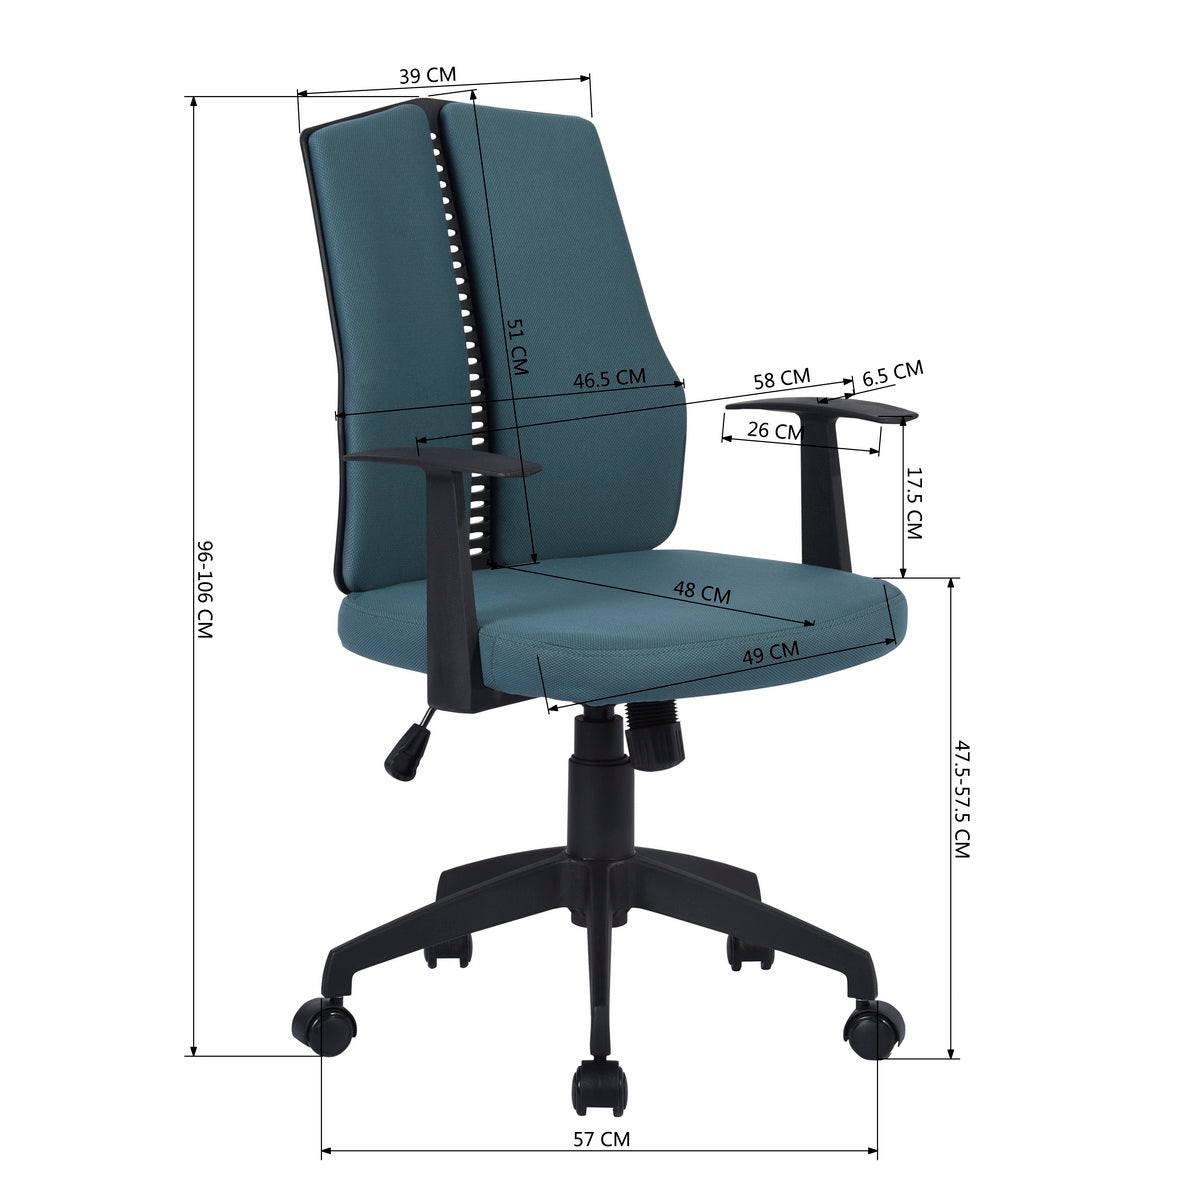 Soris Office Chair